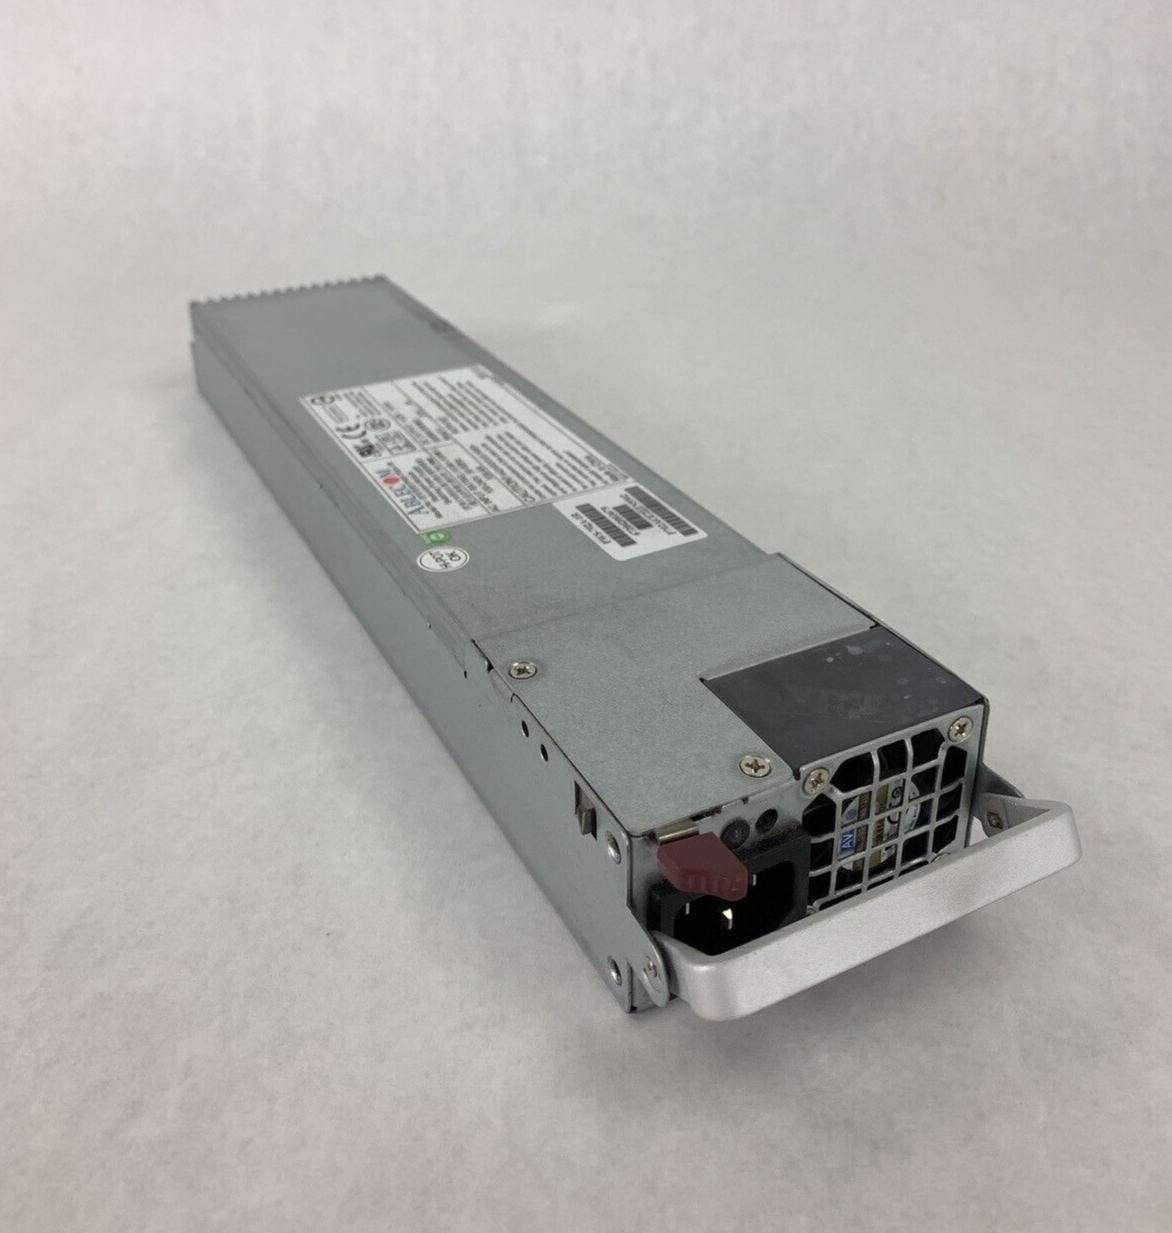 Ablecom PWS-702A-1R 100-240V 700 Watt Server Power Supply